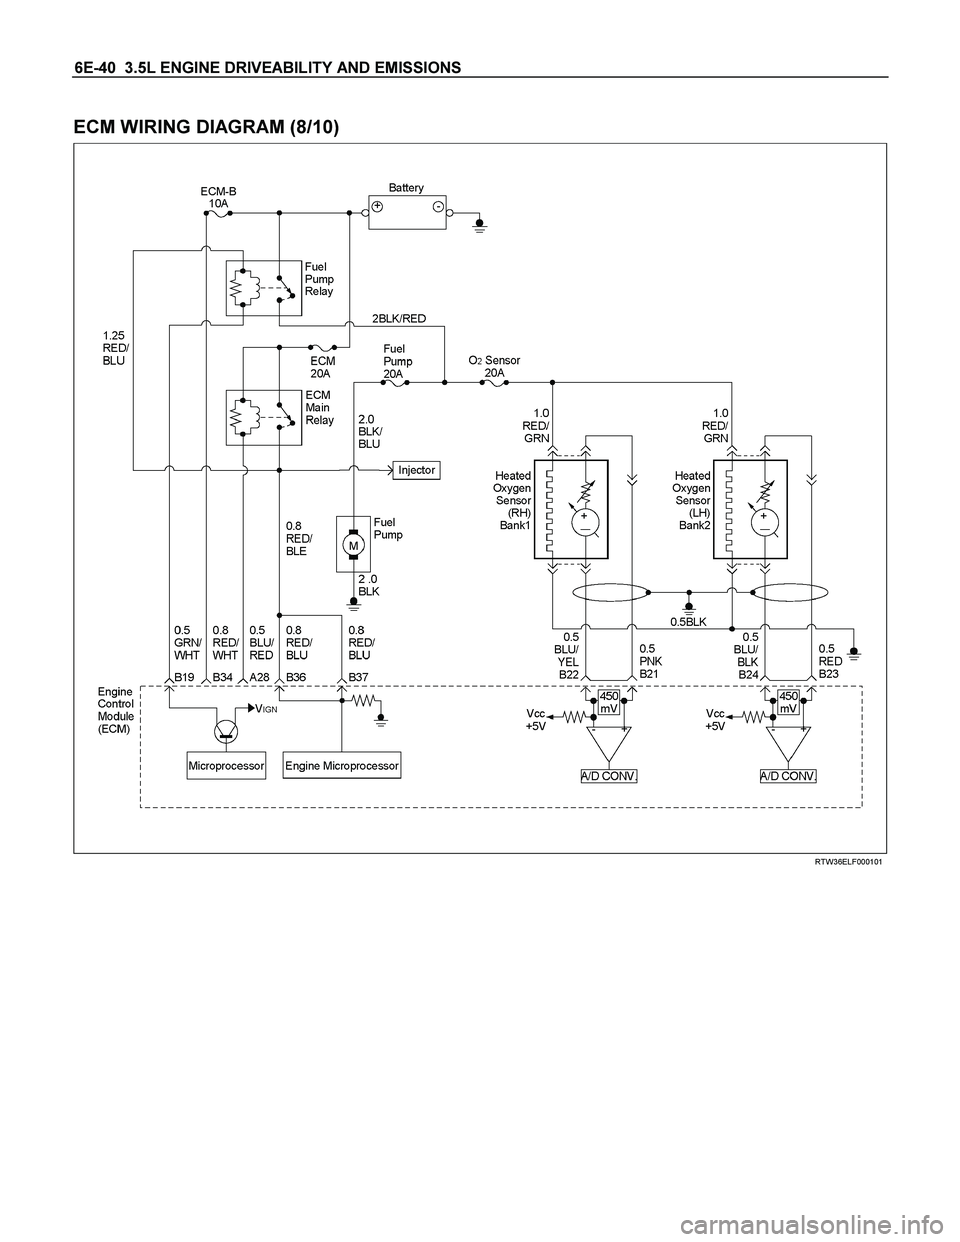 ISUZU TF SERIES 2004  Workshop Manual 6E-40  3.5L ENGINE DRIVEABILITY AND EMISSIONS 
 
ECM WIRING DIAGRAM (8/10) 
  
 
 
 
RTW36ELF000101 
  